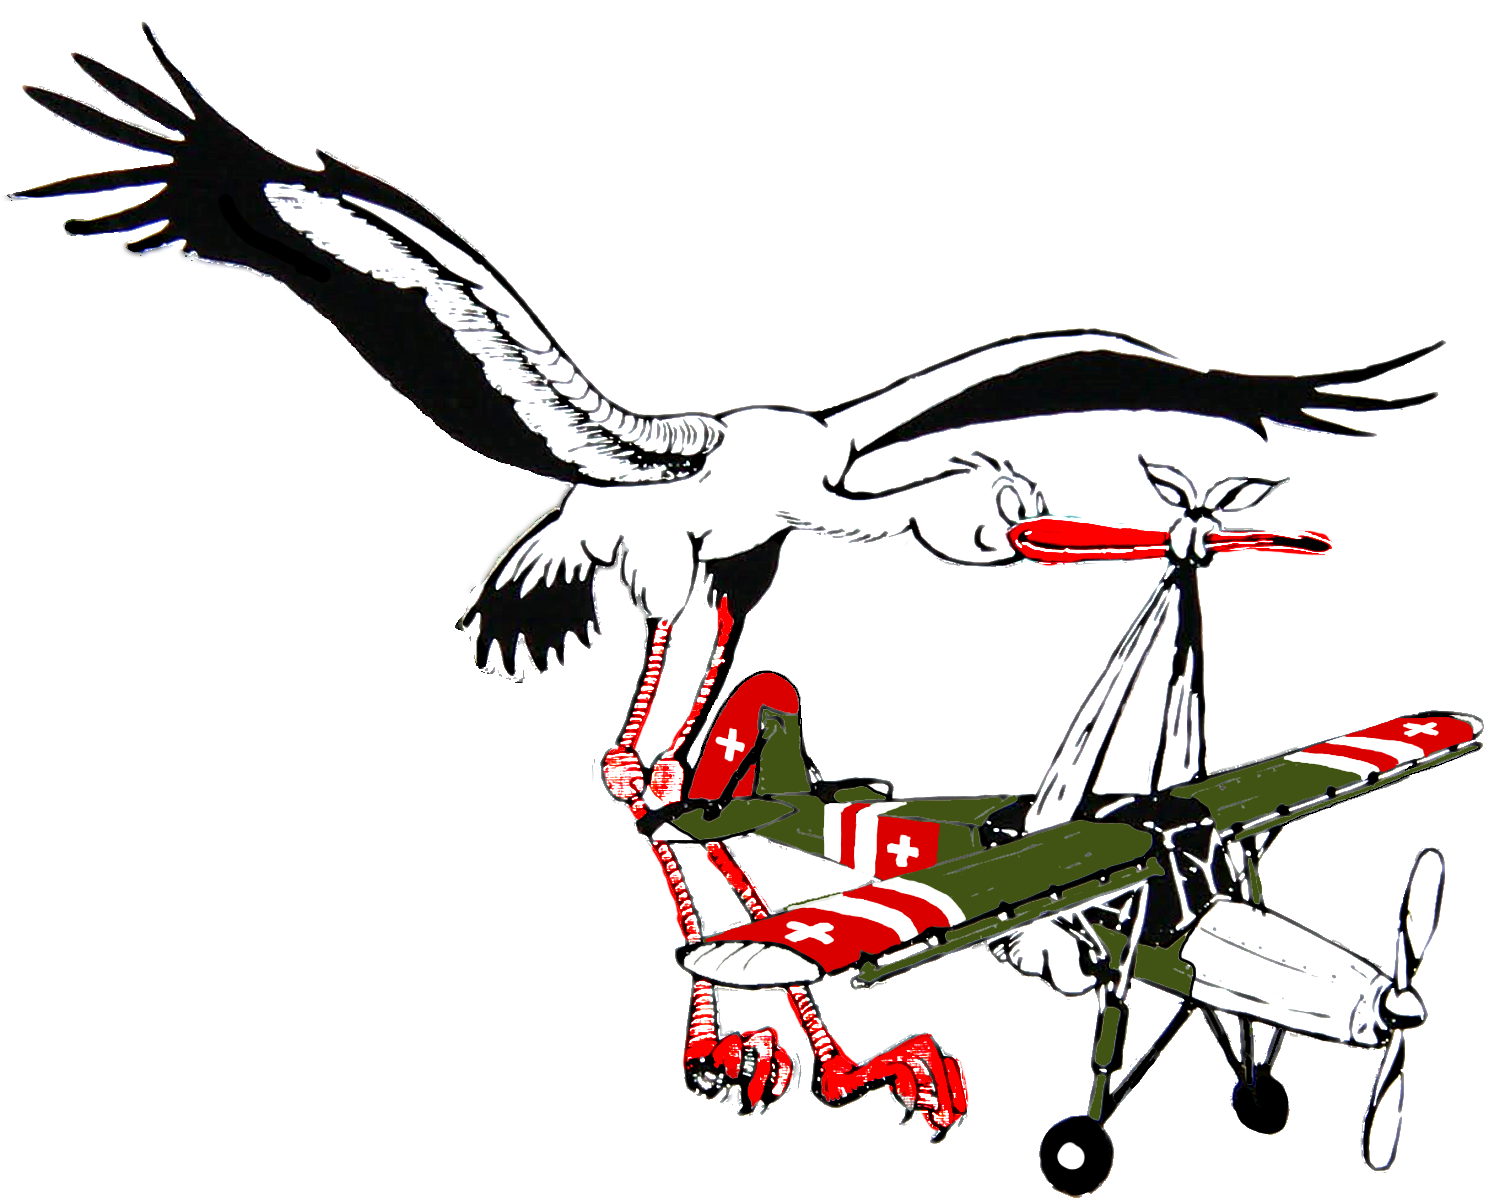 Swiss Storch Team - Golden Eagle (1600x1232)